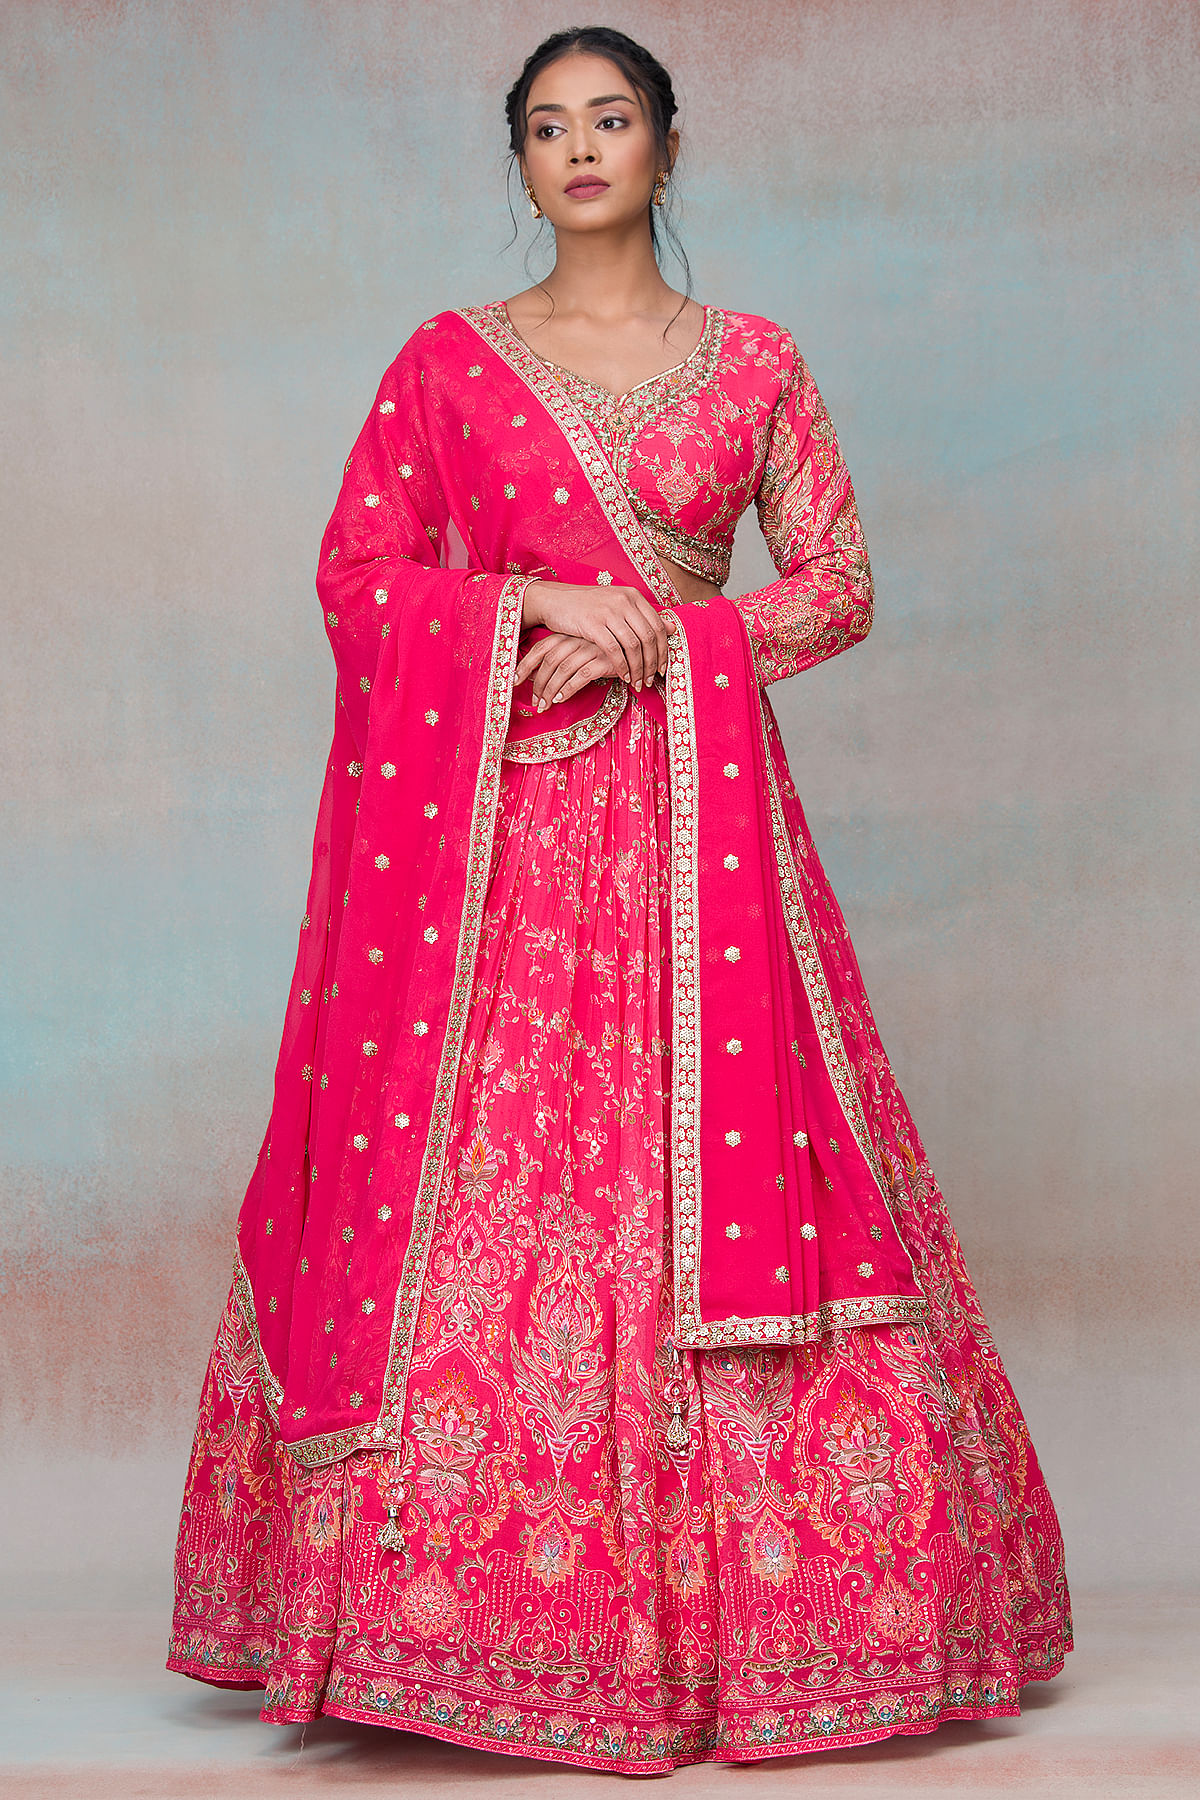 Latest Design Lehenga Style Sarees Photos Collection Wedding Lehenga Sarees  Party Wear Lengha Saree - YouTube